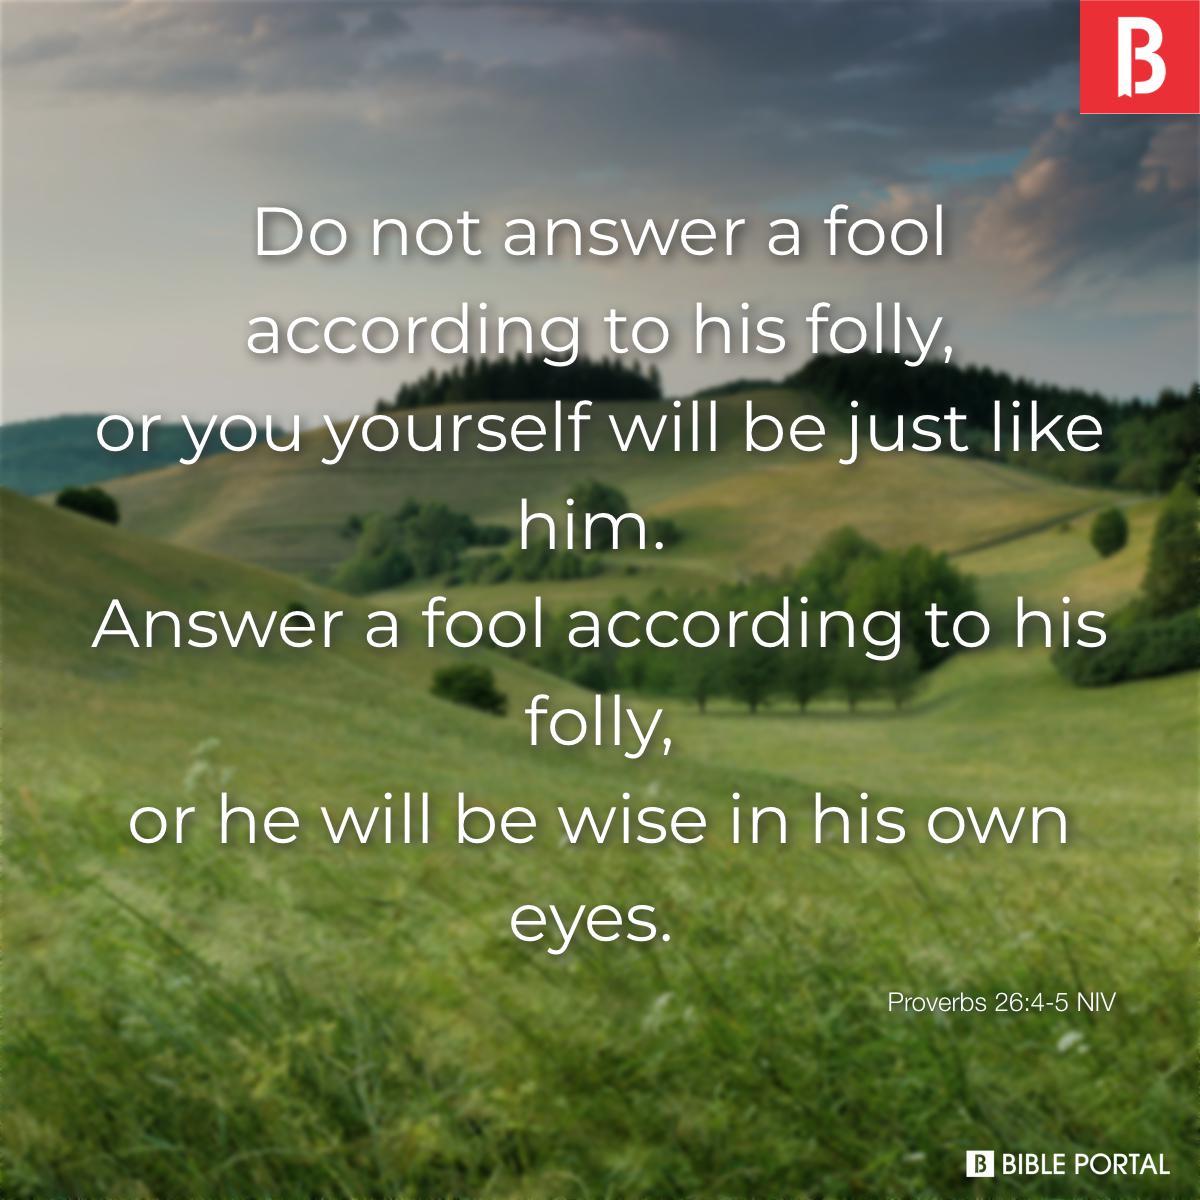 Proverbs 26:4-5 NIV